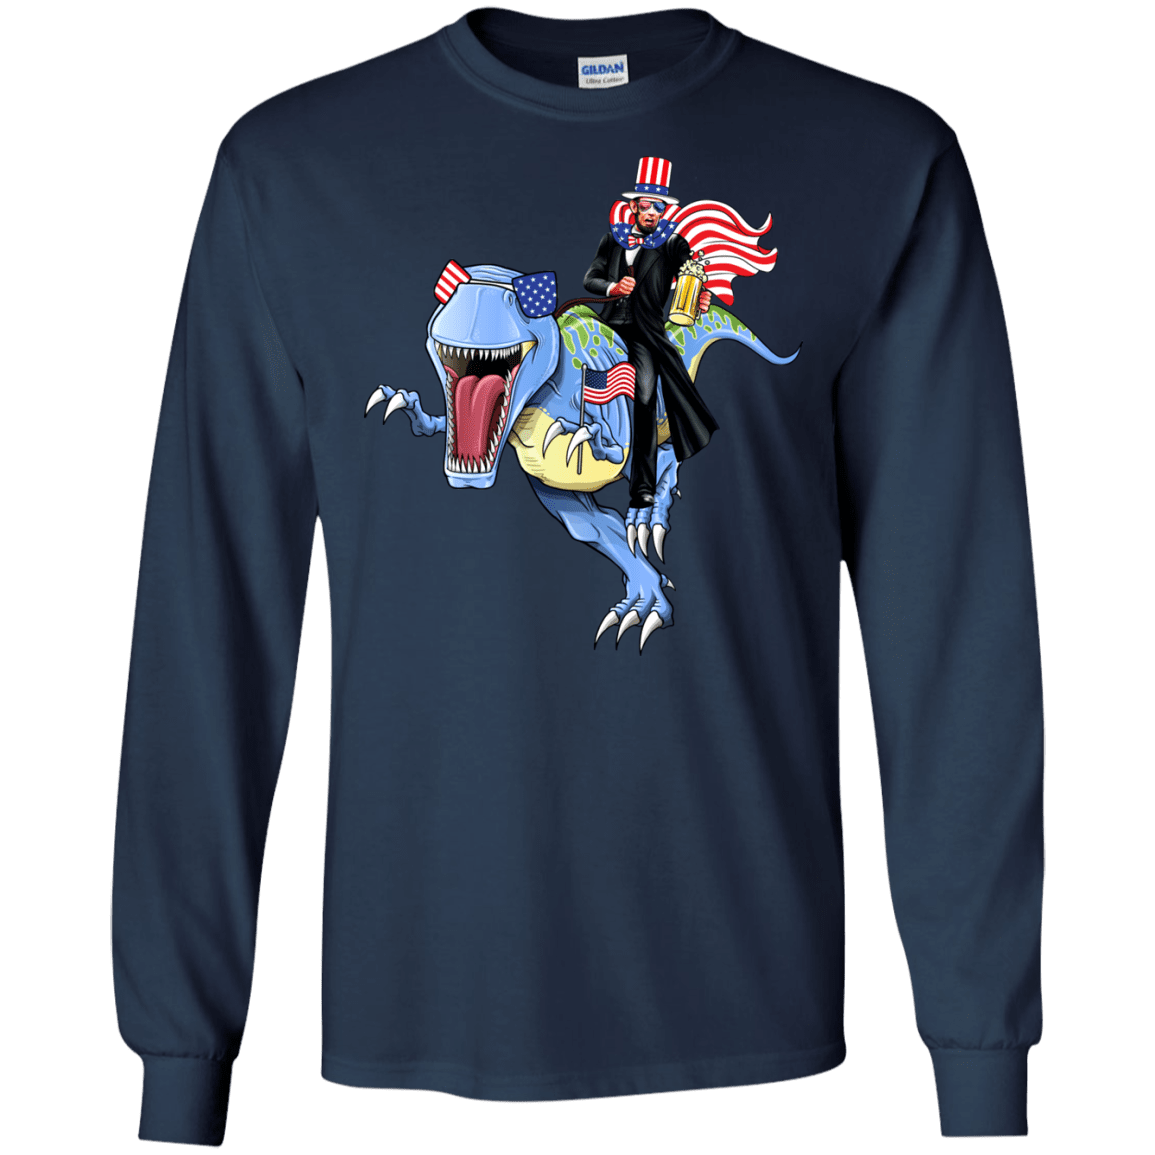 Military T-Shirt "Lincoln Dinosaur Beer Merica Flag" Front-TShirt-General-Veterans Nation